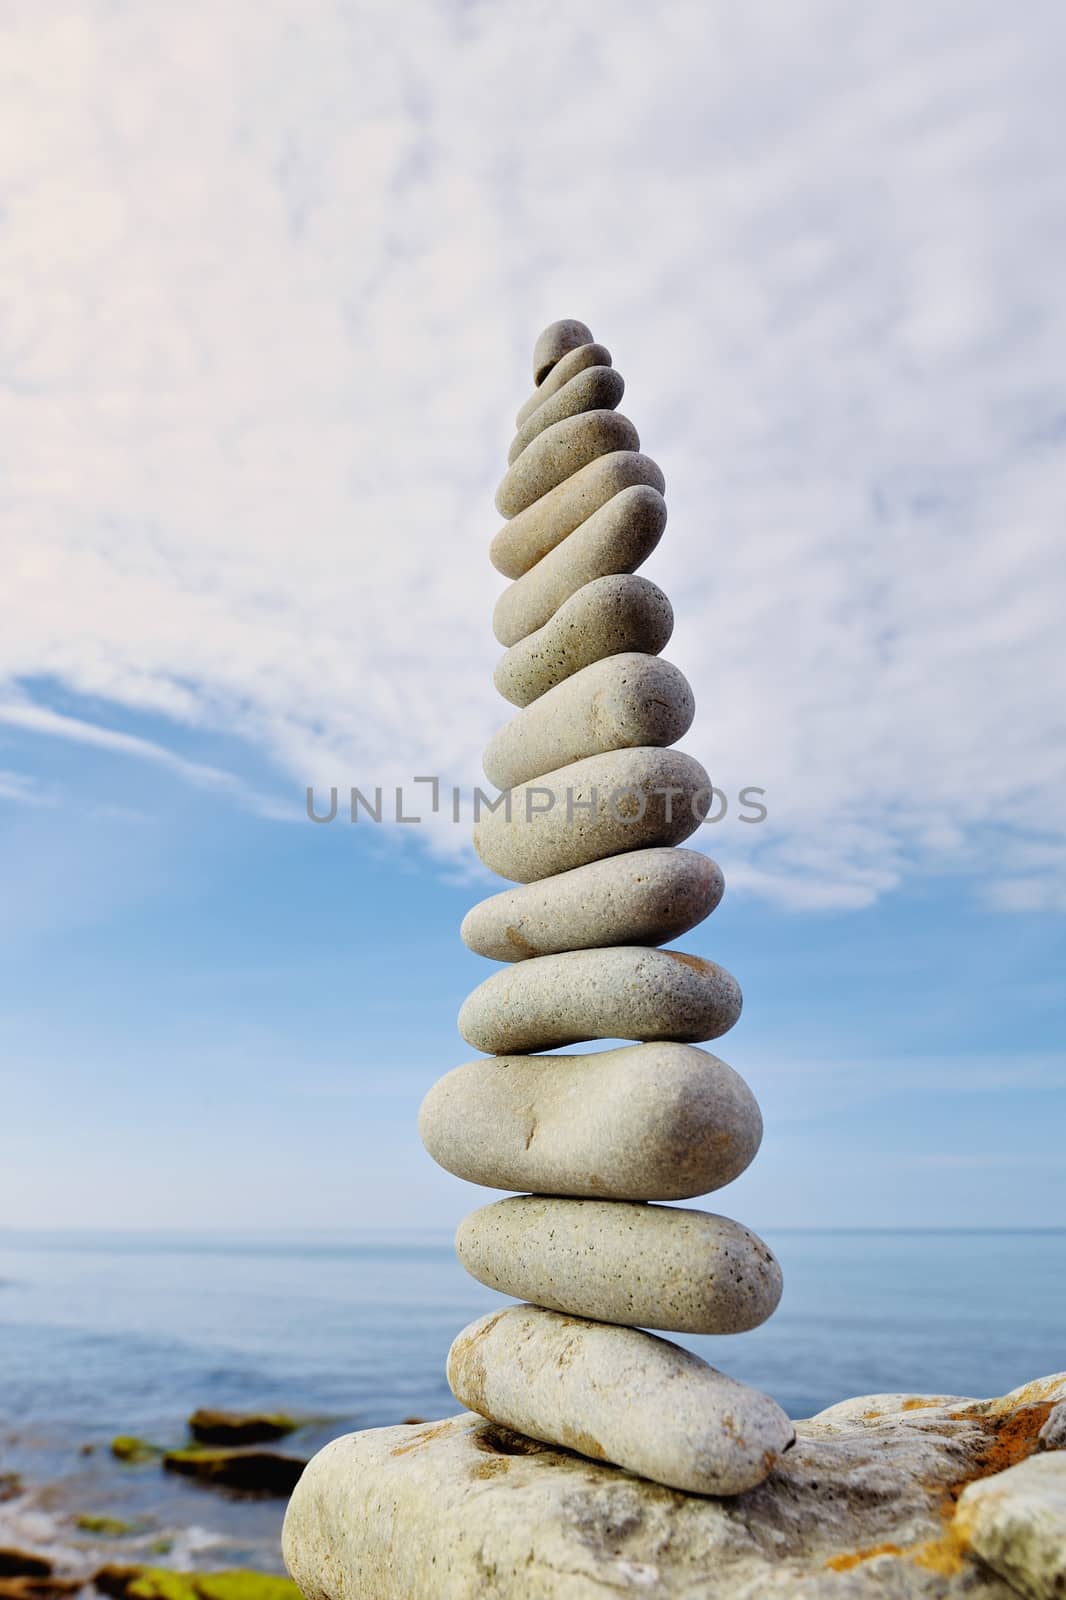 Pyramidal stack of pebbles on the seacoast